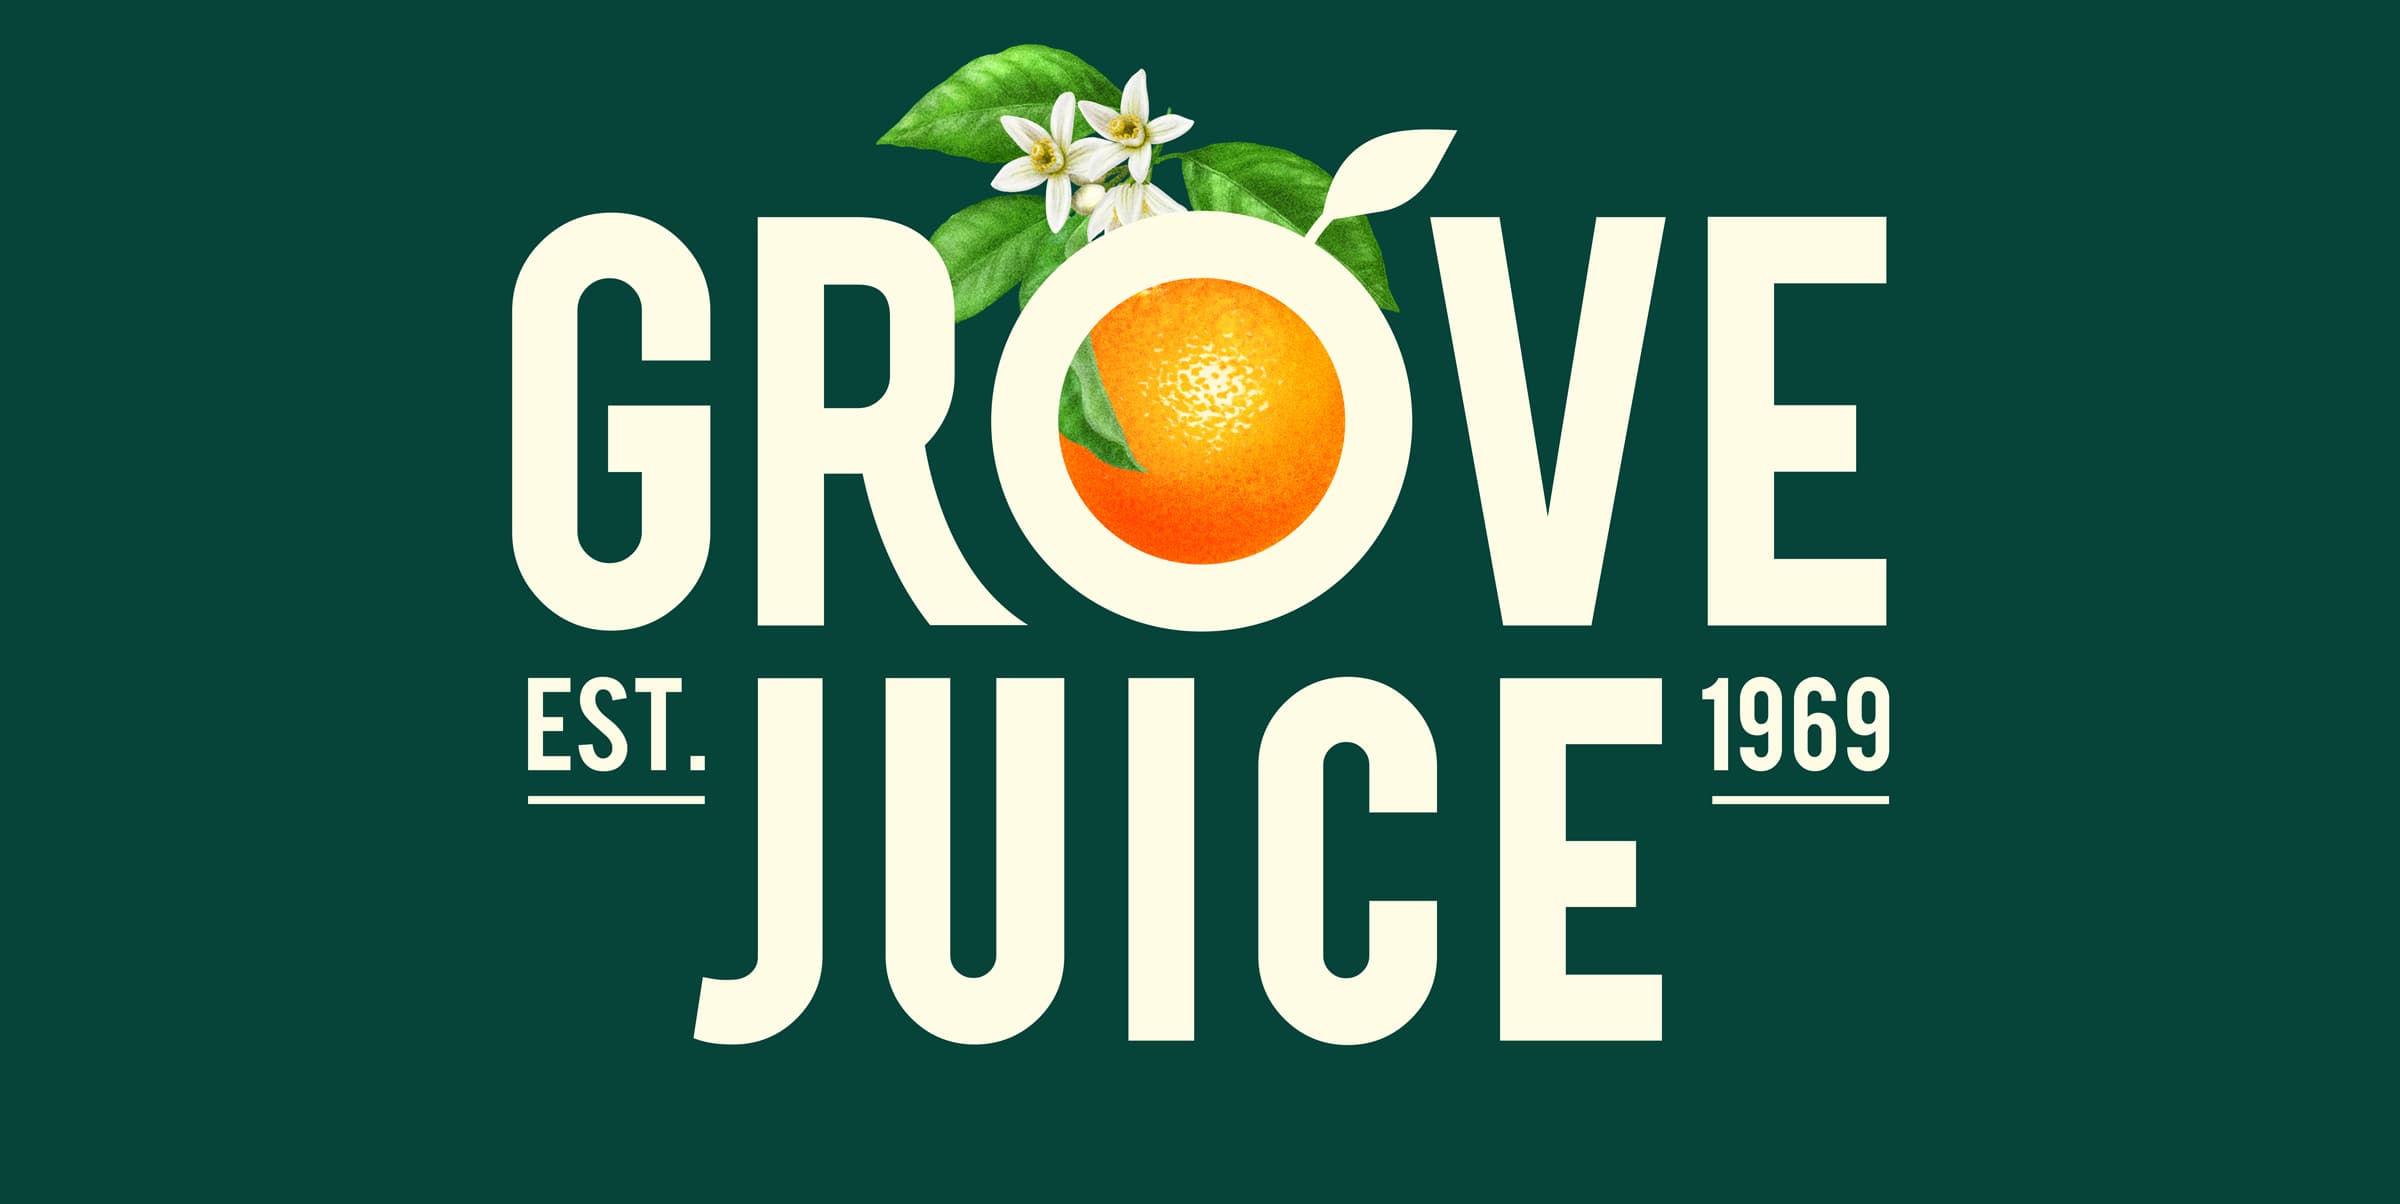 grove-juice-handcraft-typography-deep-green-branding-fresh-playful-sophisticated-bold-branding-visual-identity